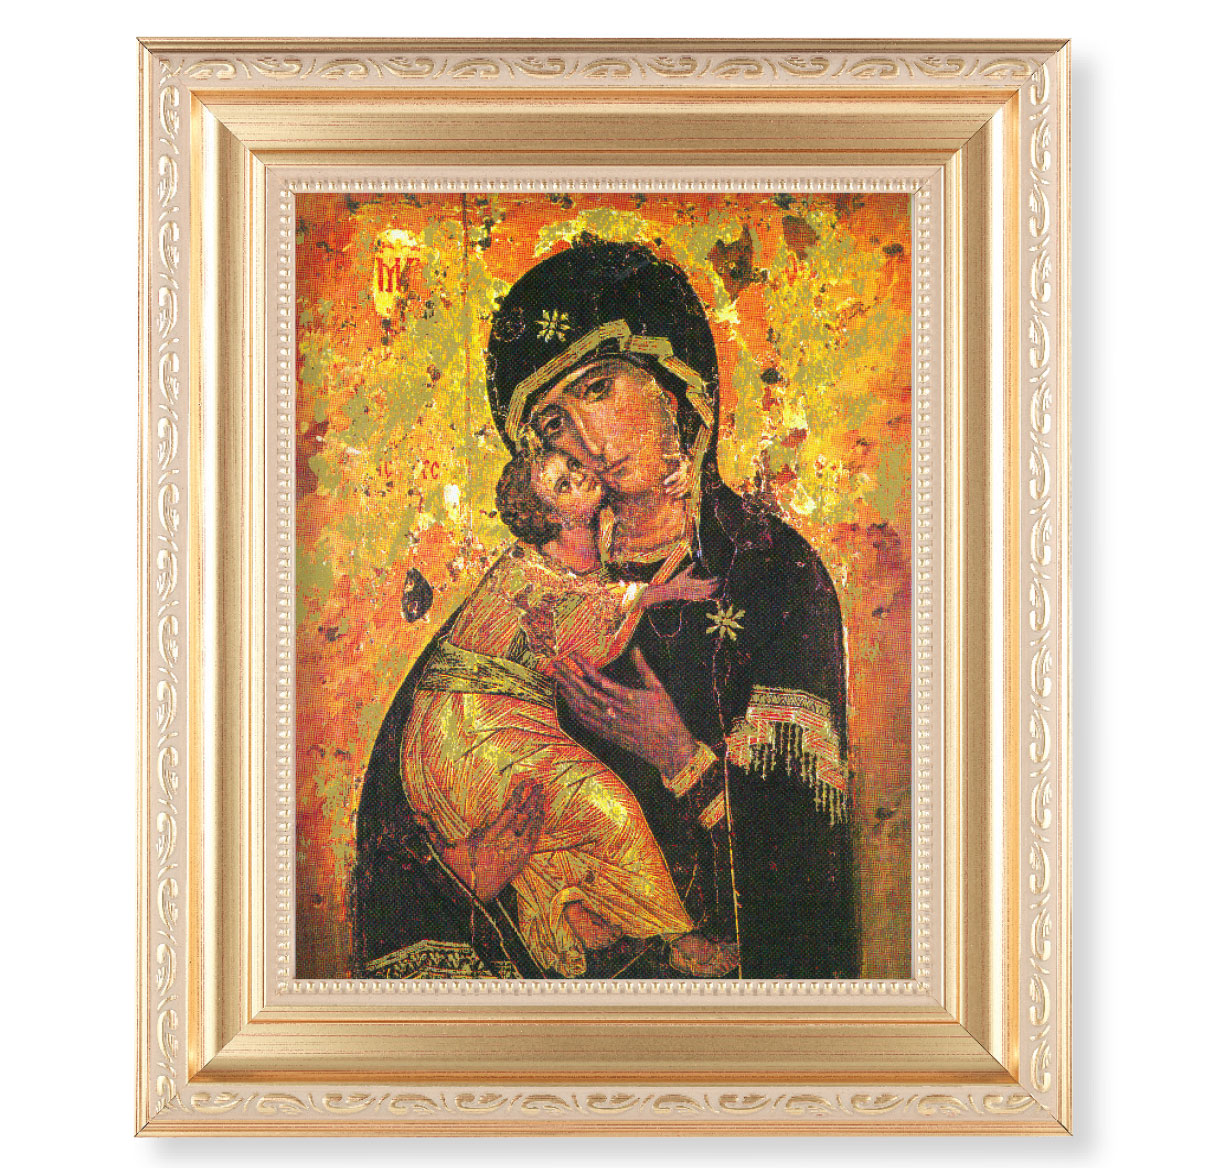 Our Lady of Vladimir Gold Framed Art